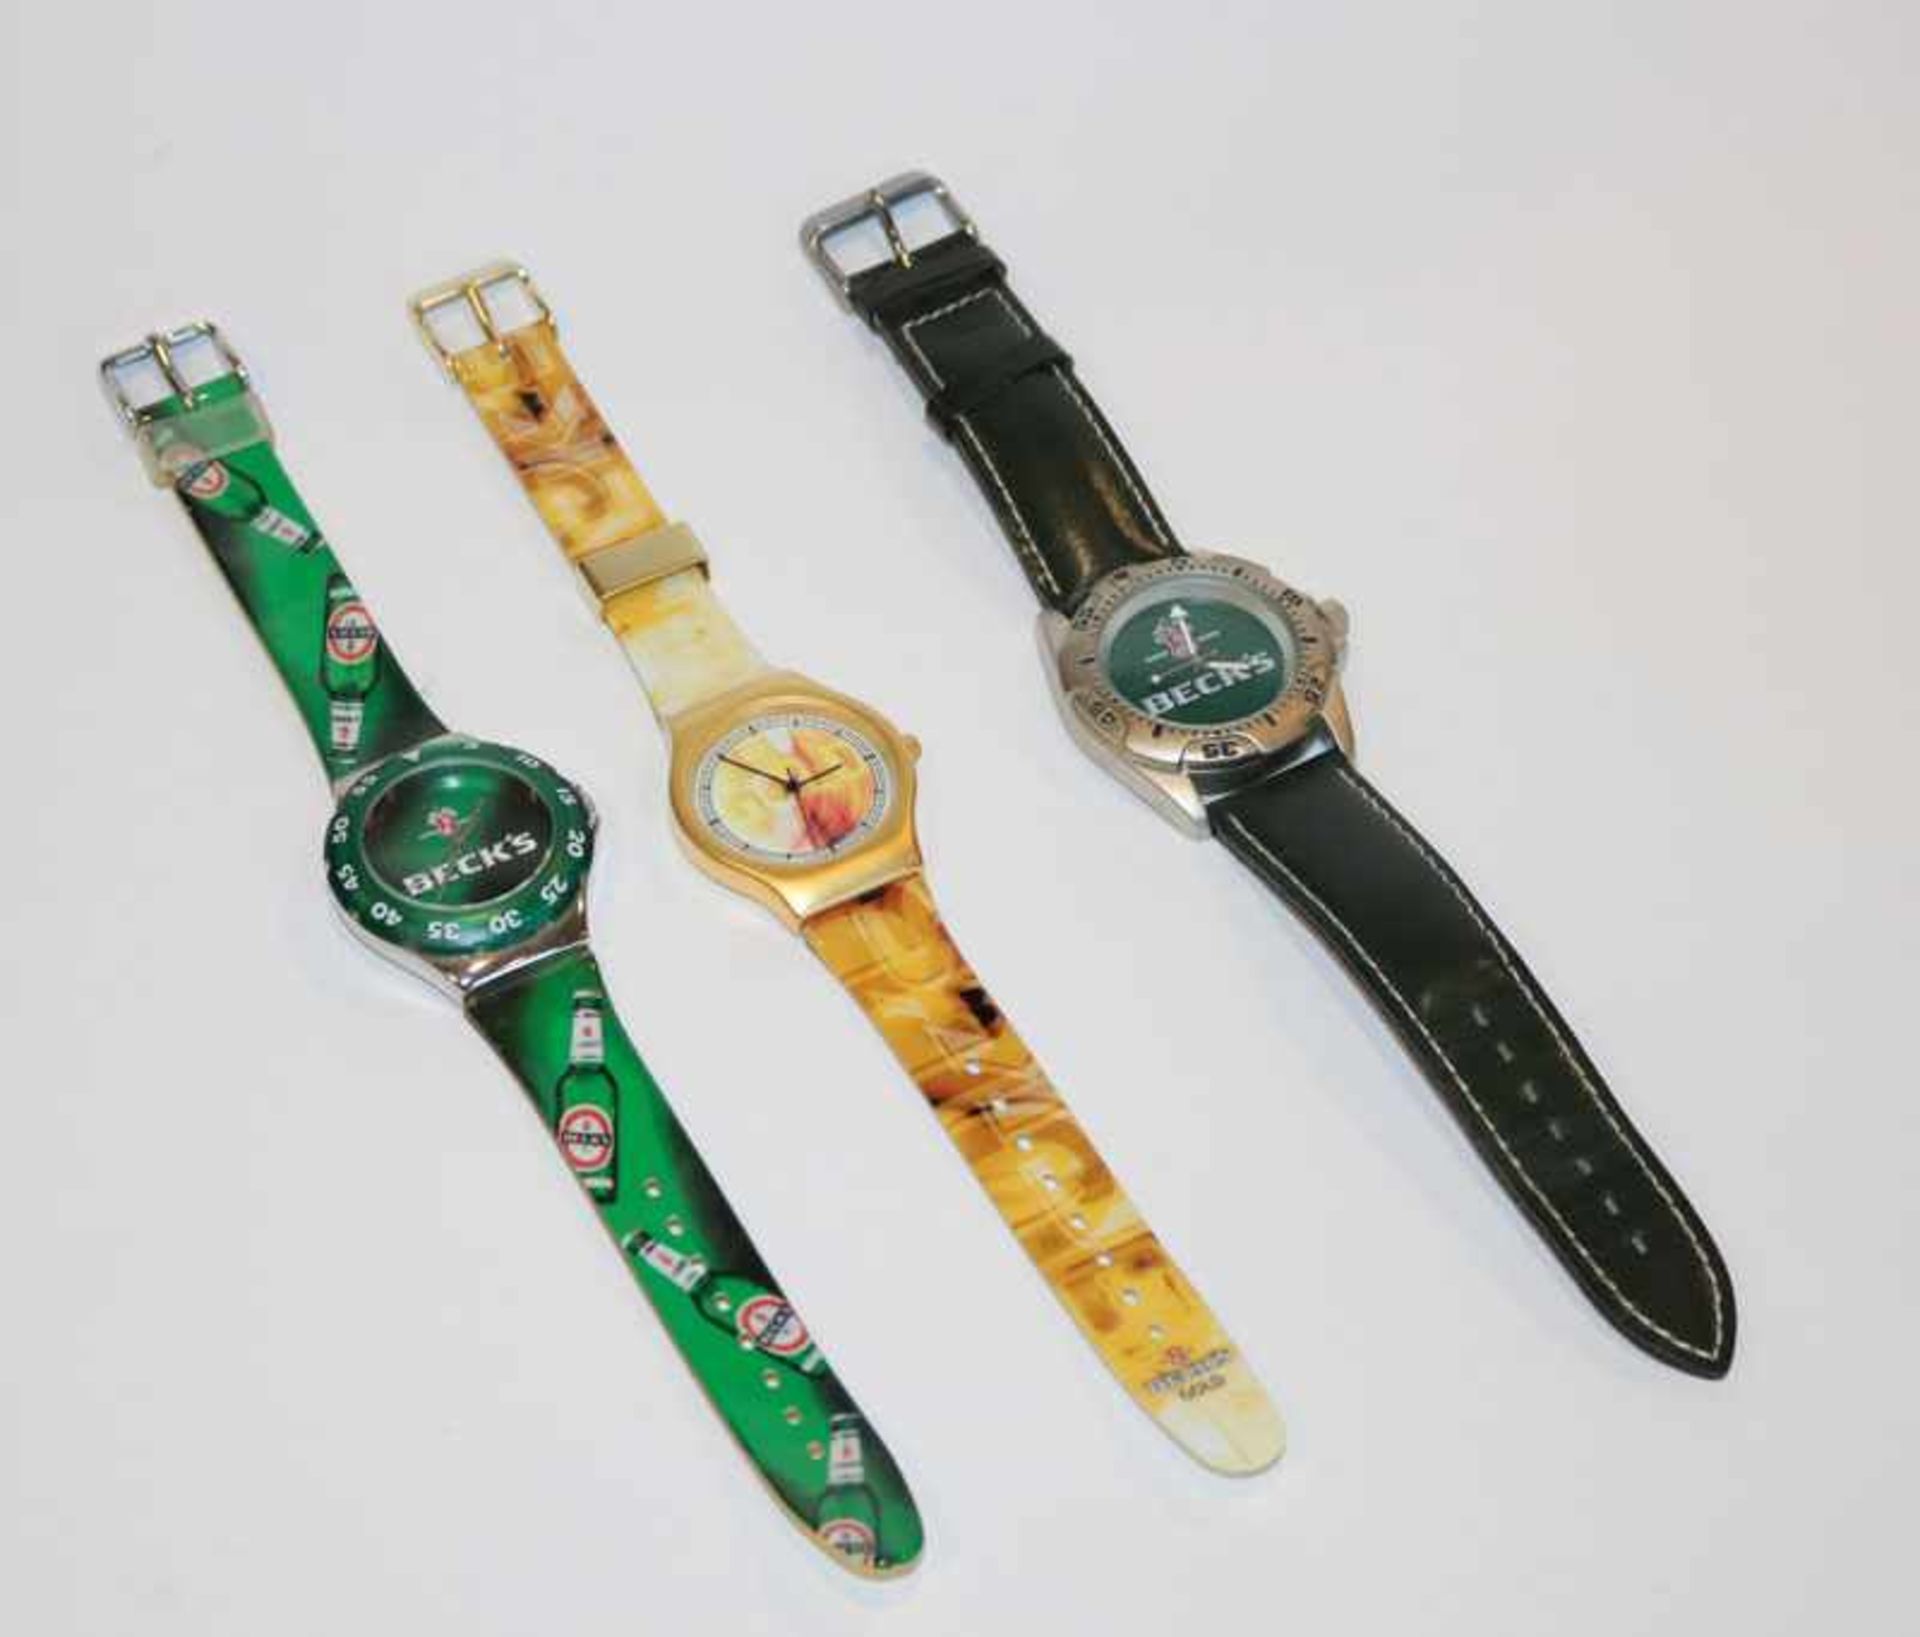 Becks Armbanduhr, limitierte Ausgabe in Originaletui und 2 Becks Armbanduhren mit grünem Armband,